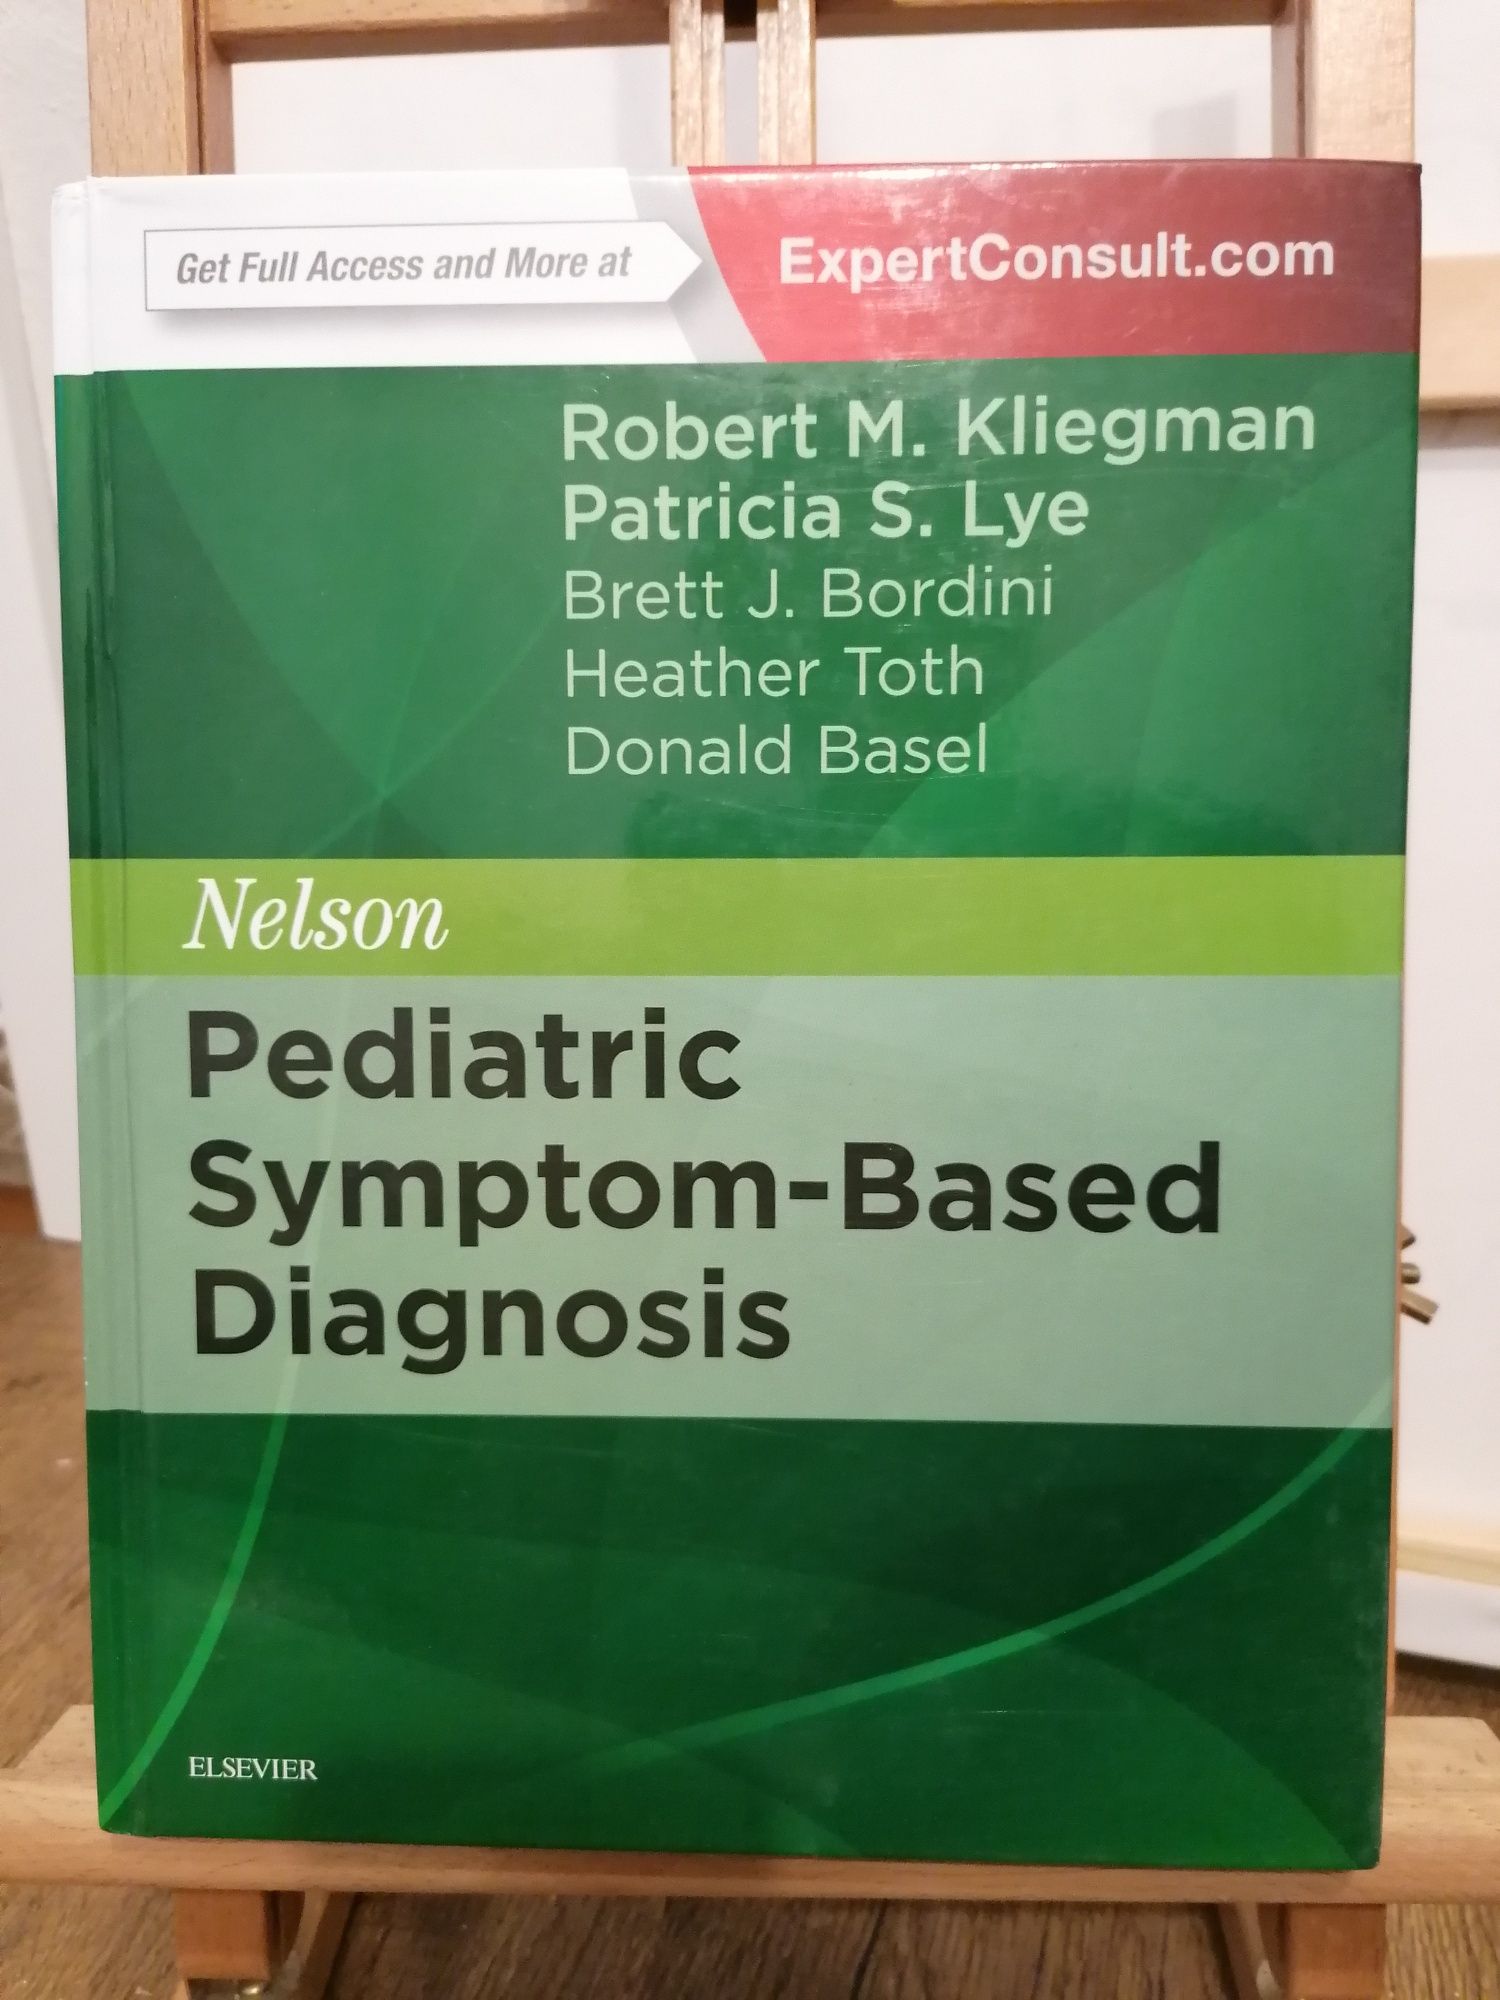 Manual medicina - Pediatric Symptom-Based Diagnosis  NELSON